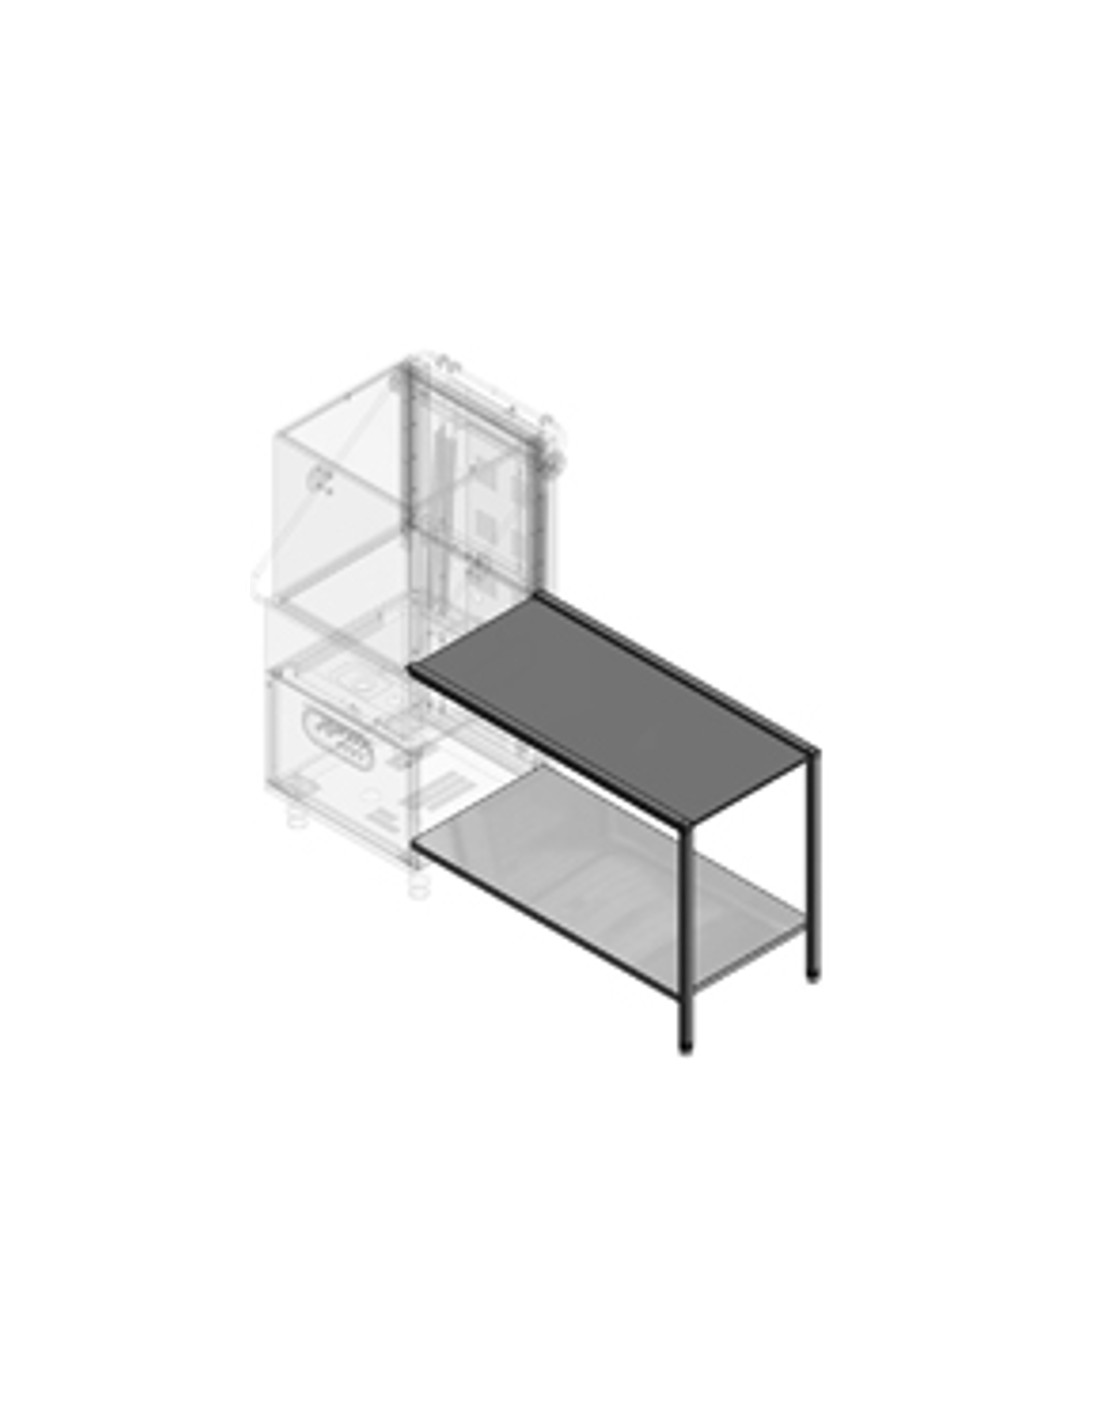 Ceiling table - Destro - Sinistro - Front - Dimensions cm 120 x 57.4 x 85 h